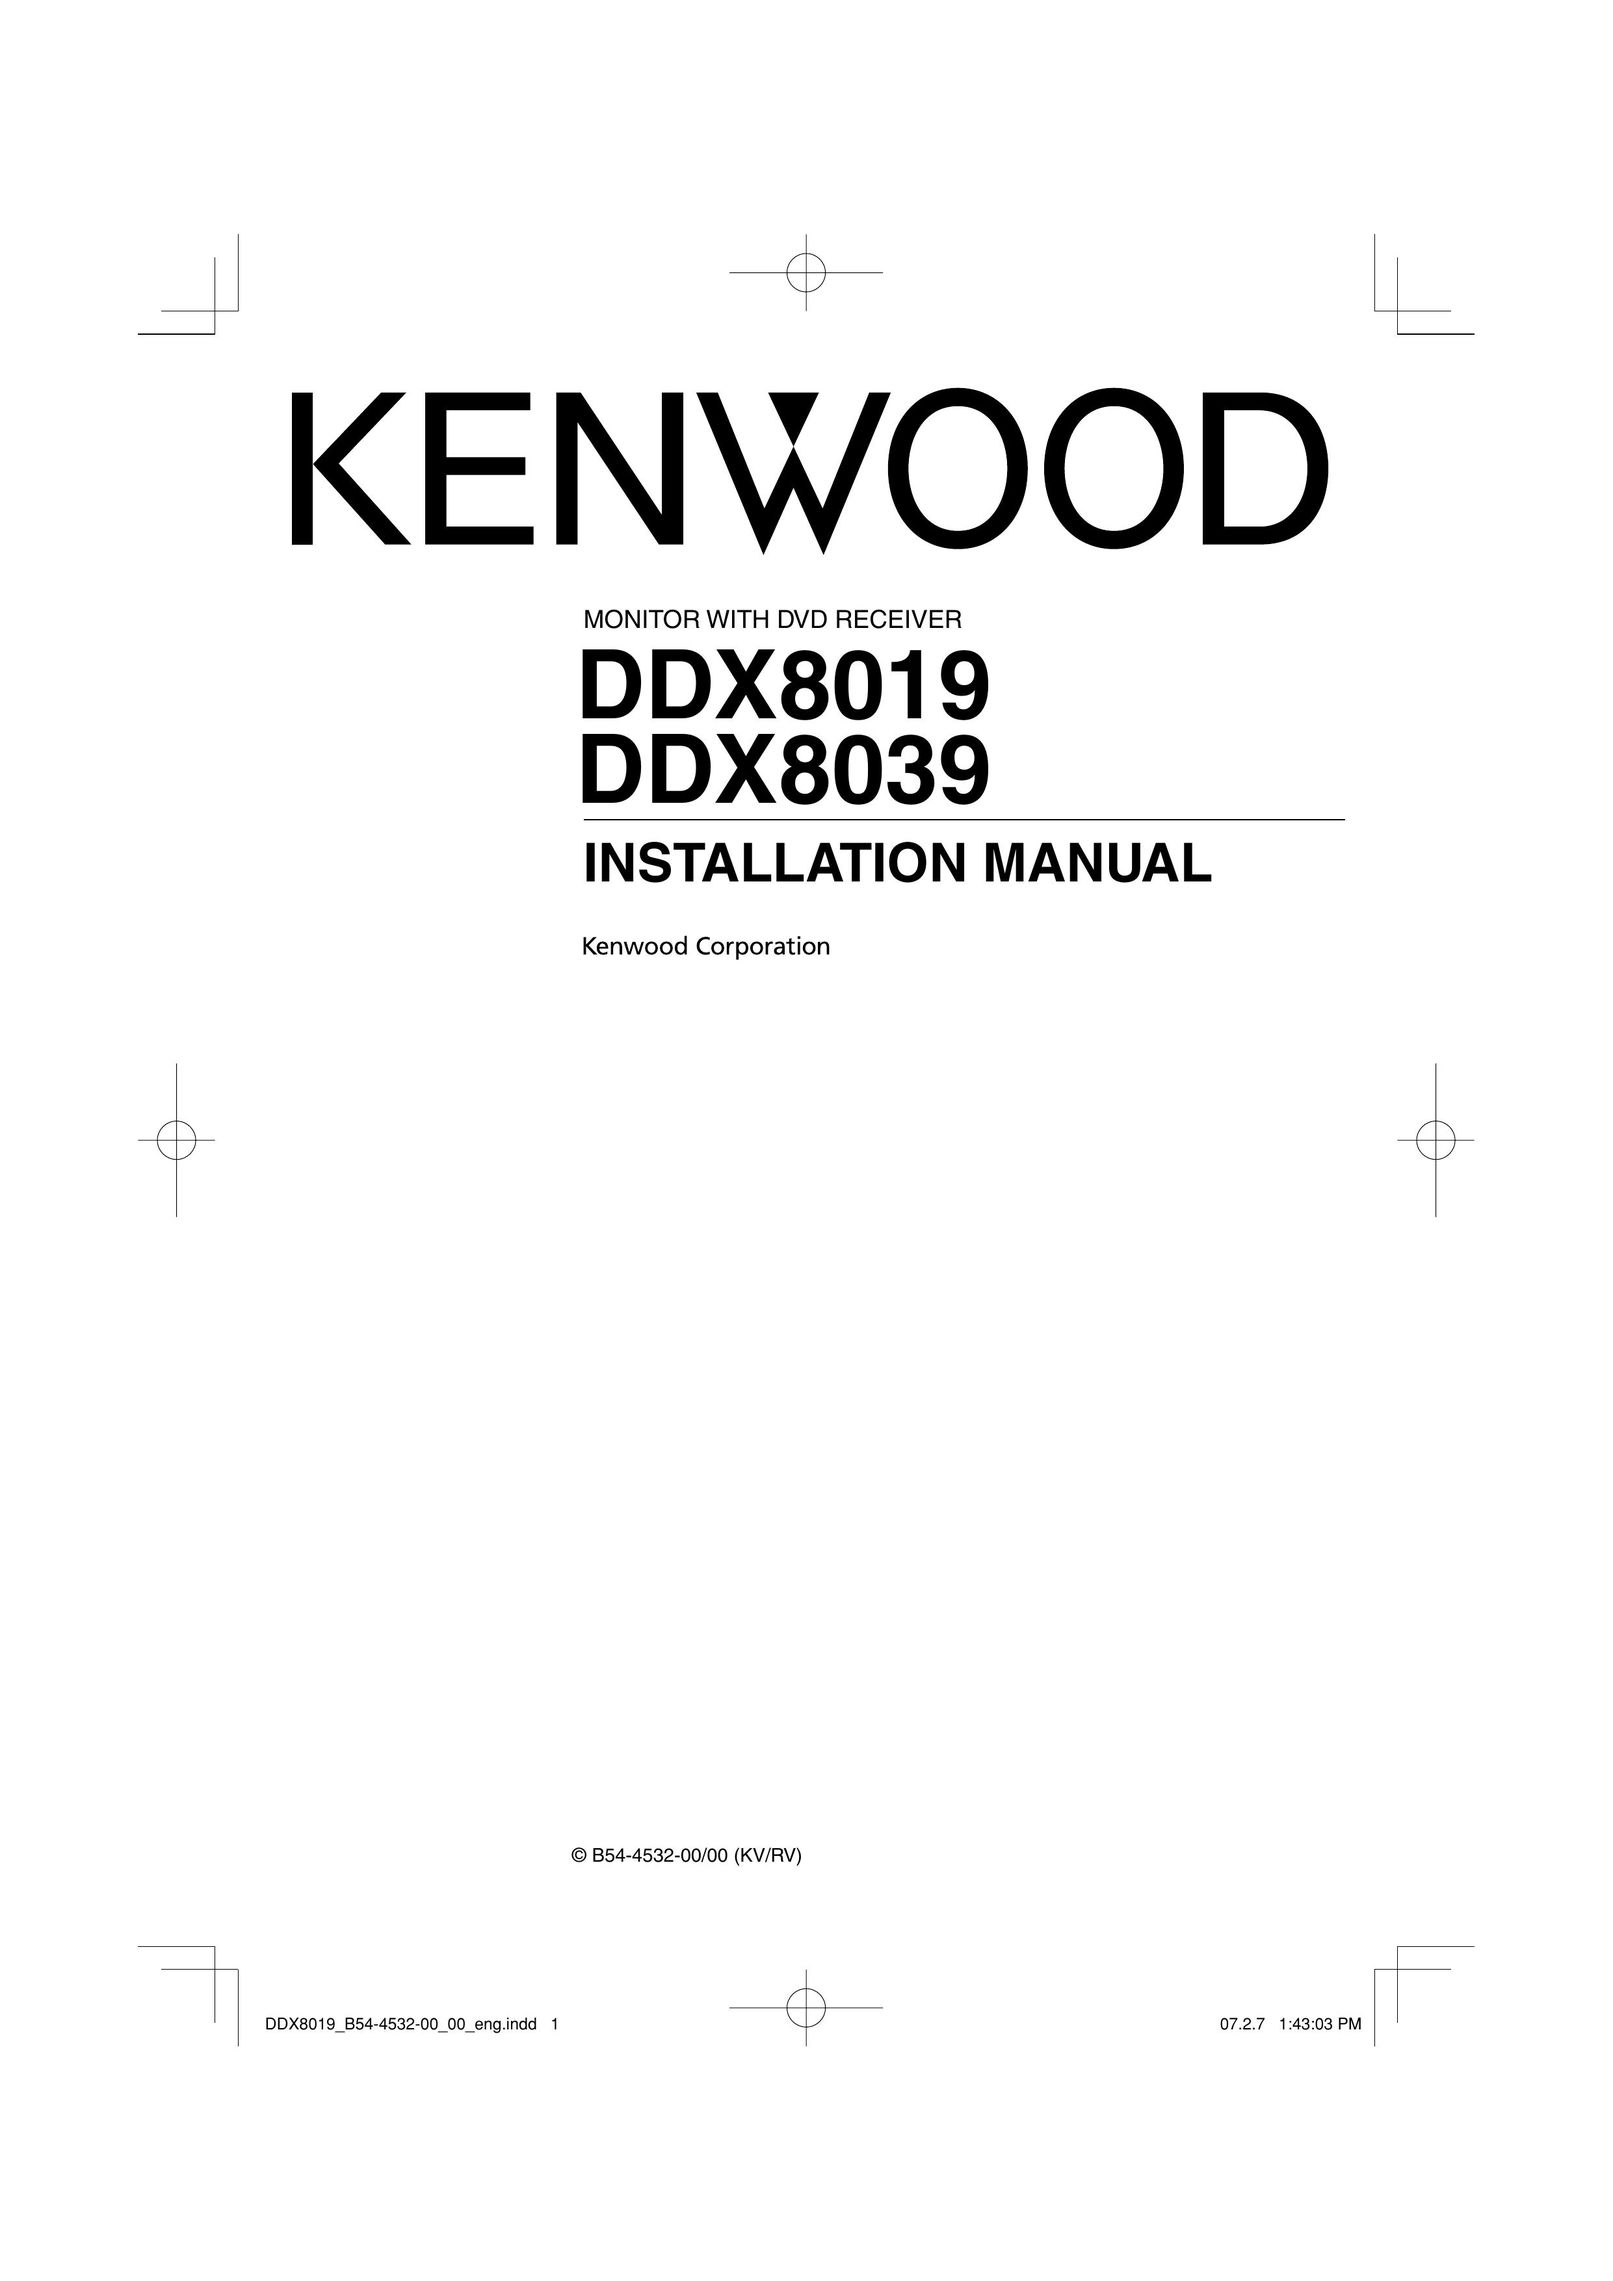 Kenwood DDX8019 Car Stereo System User Manual